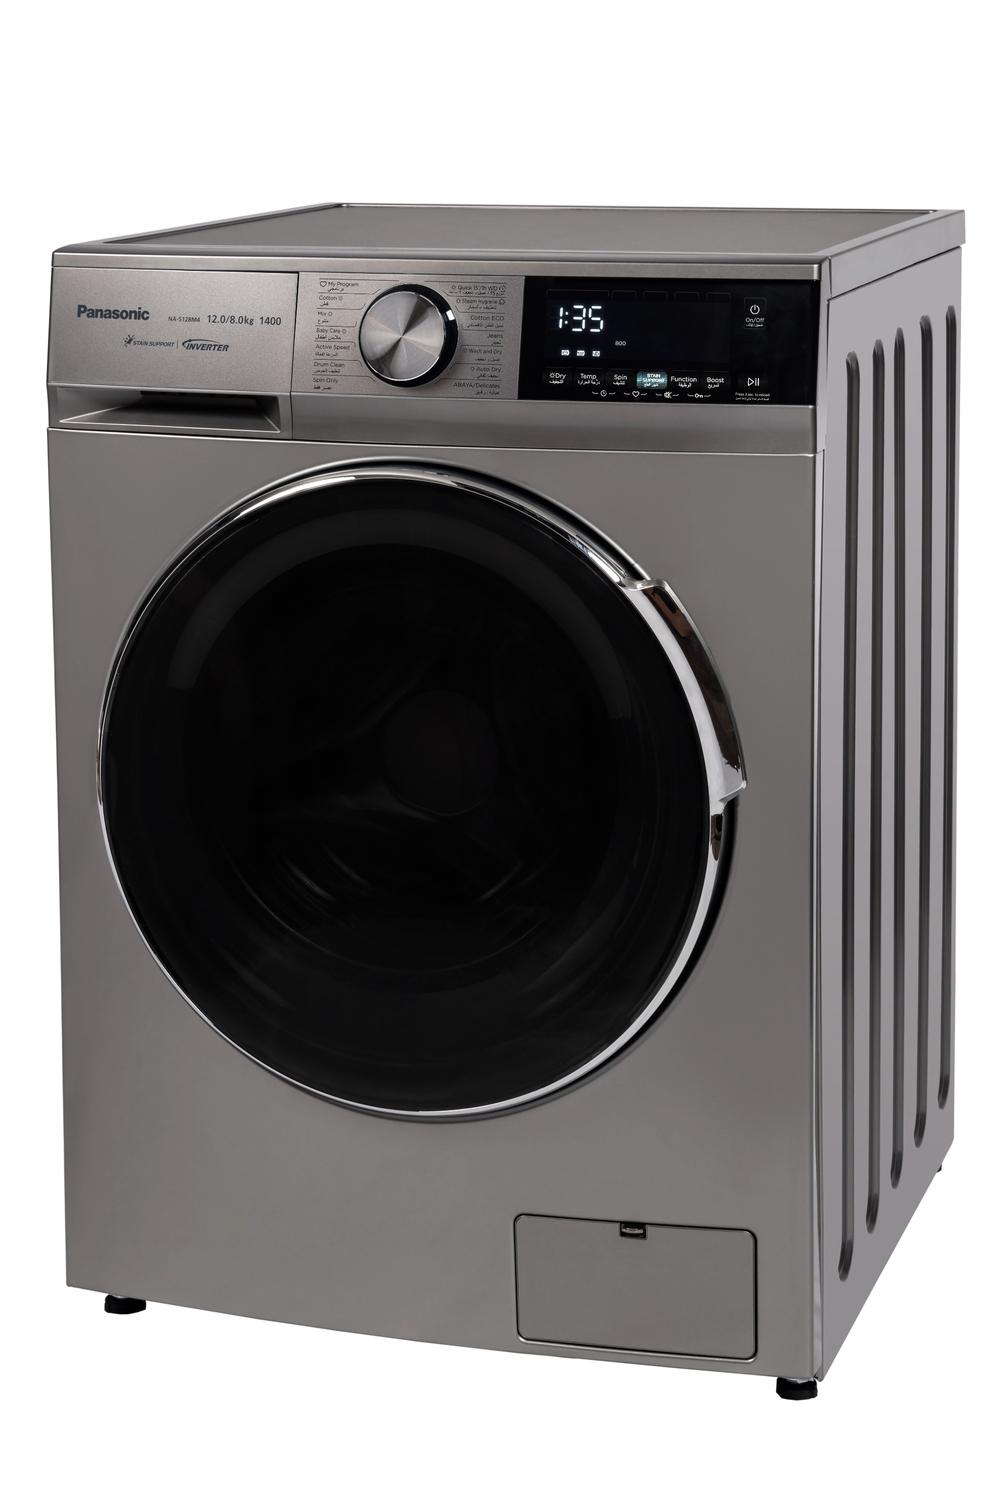 Panasonic 12/8 Kg Washer & Dryer | Silver  - Modern Electronics